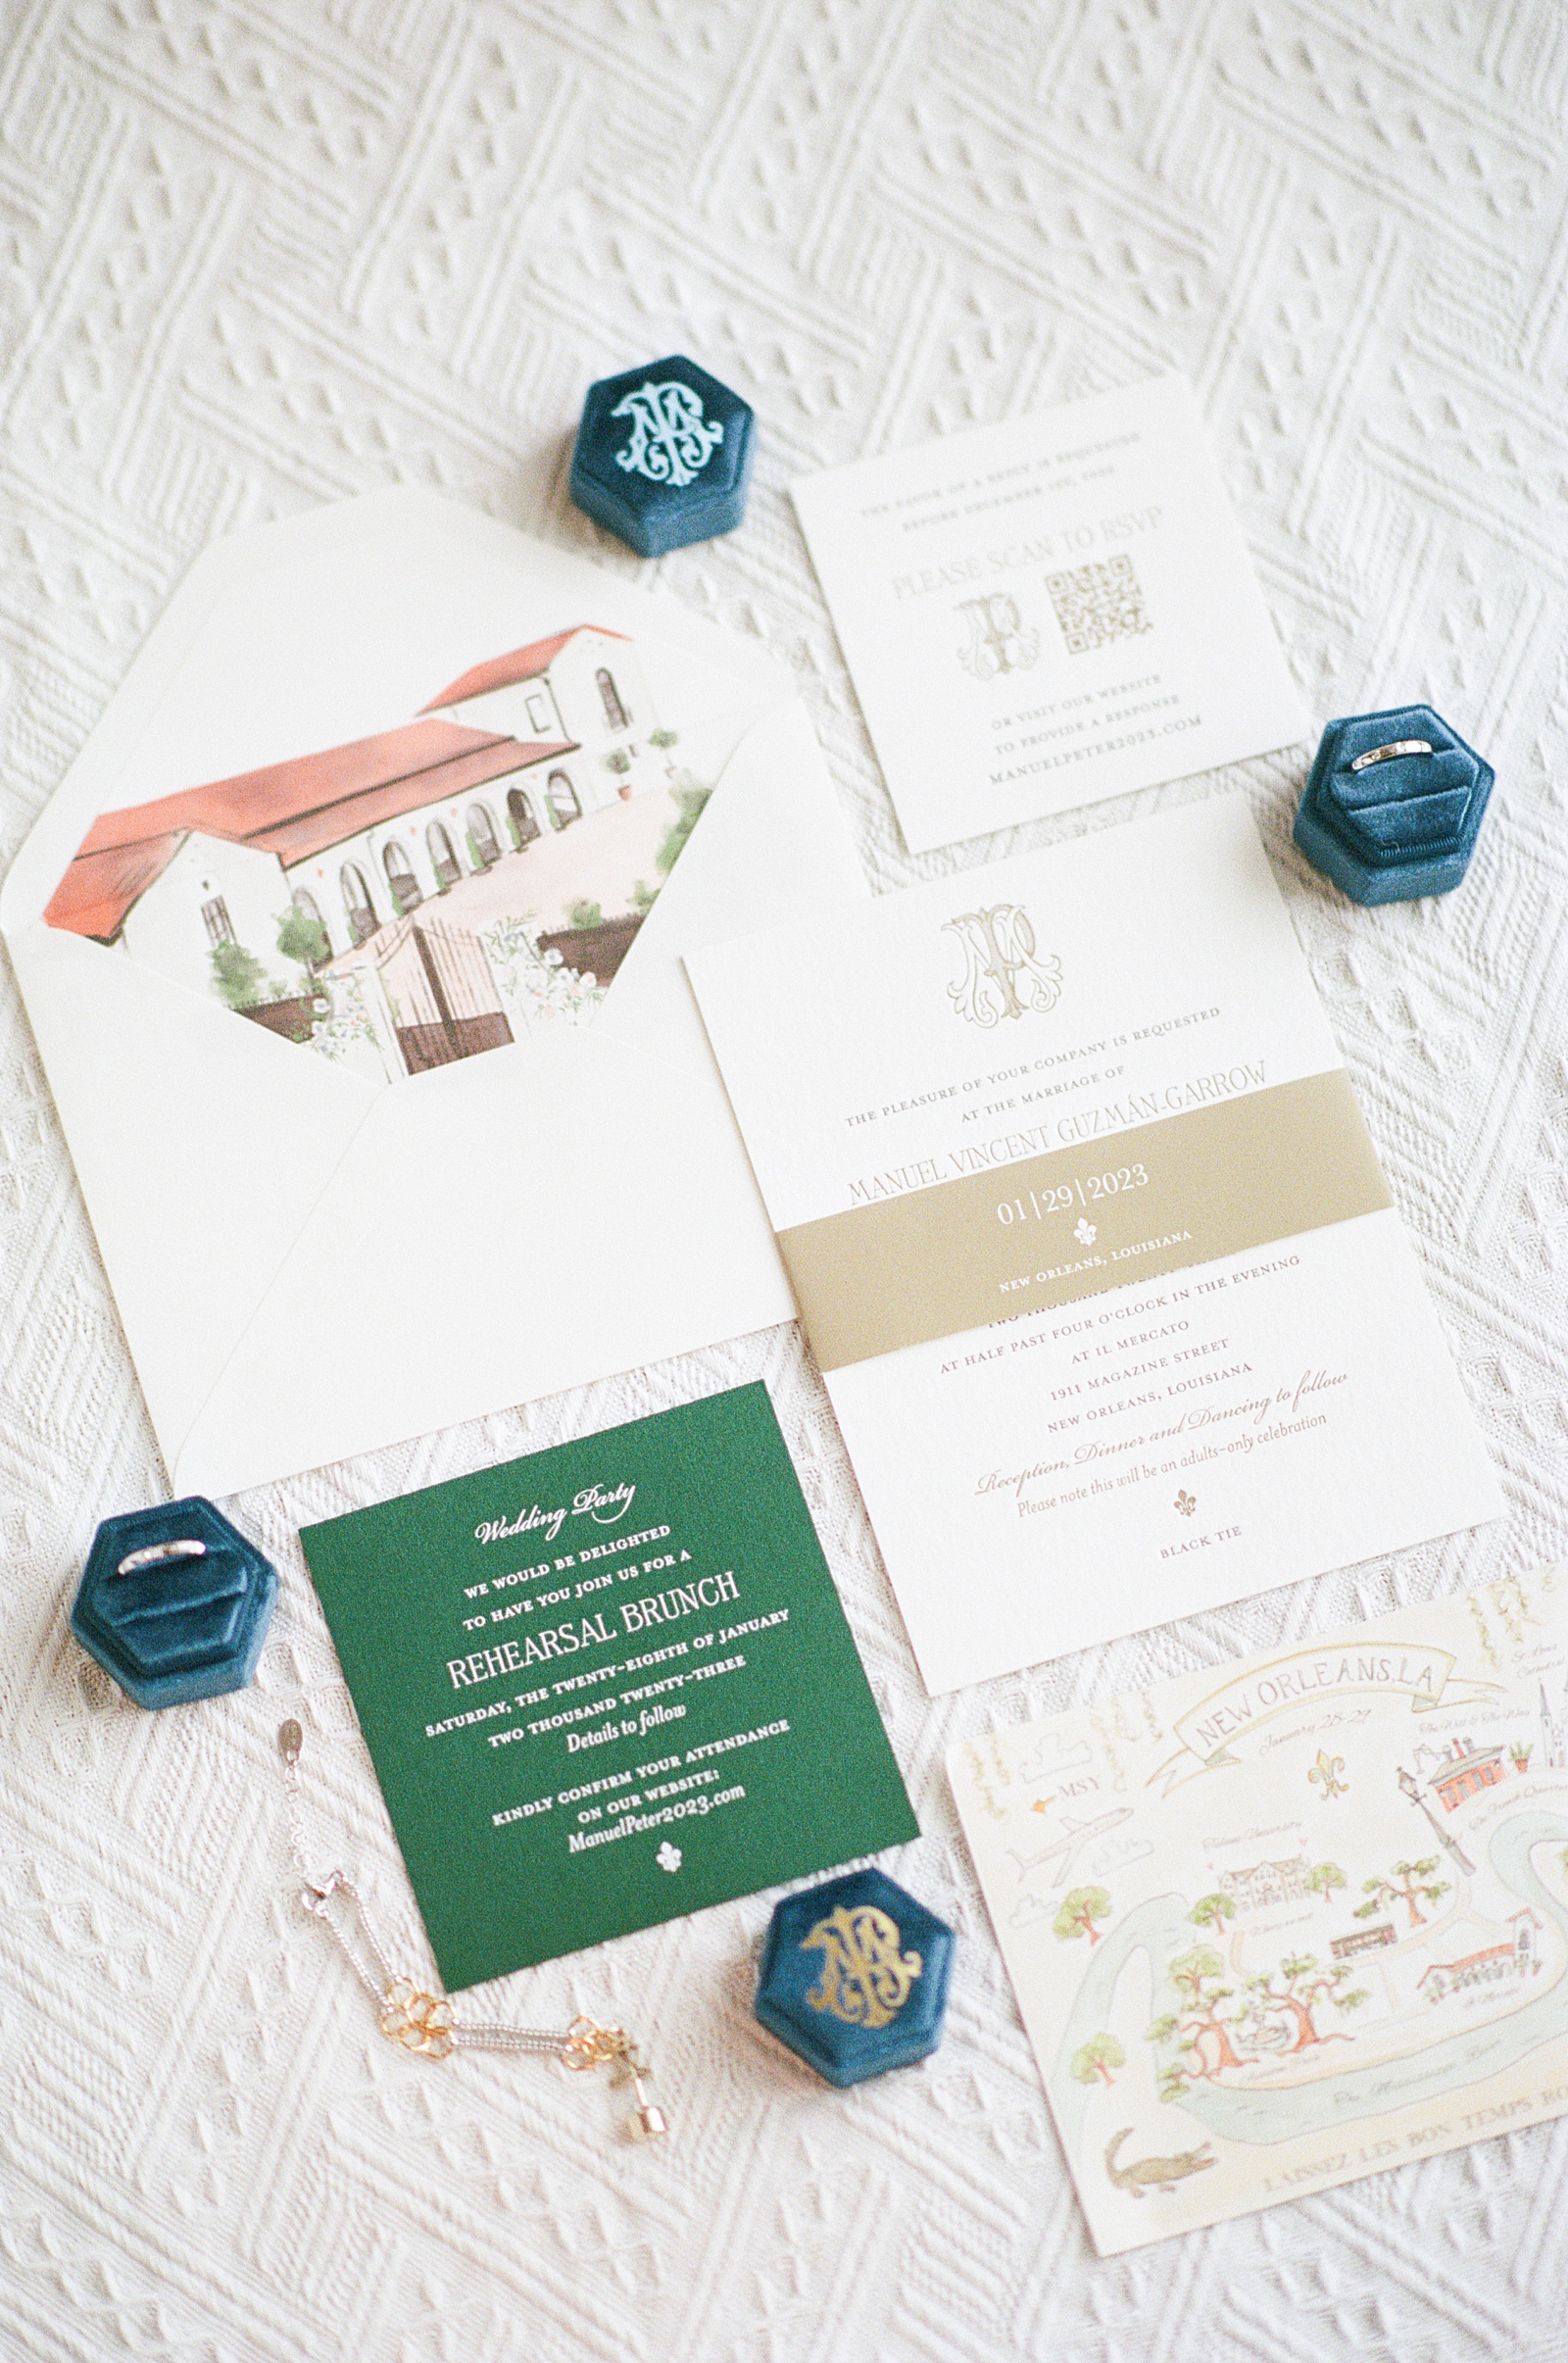 Custom wedding invitations sit on a lace backdrop.